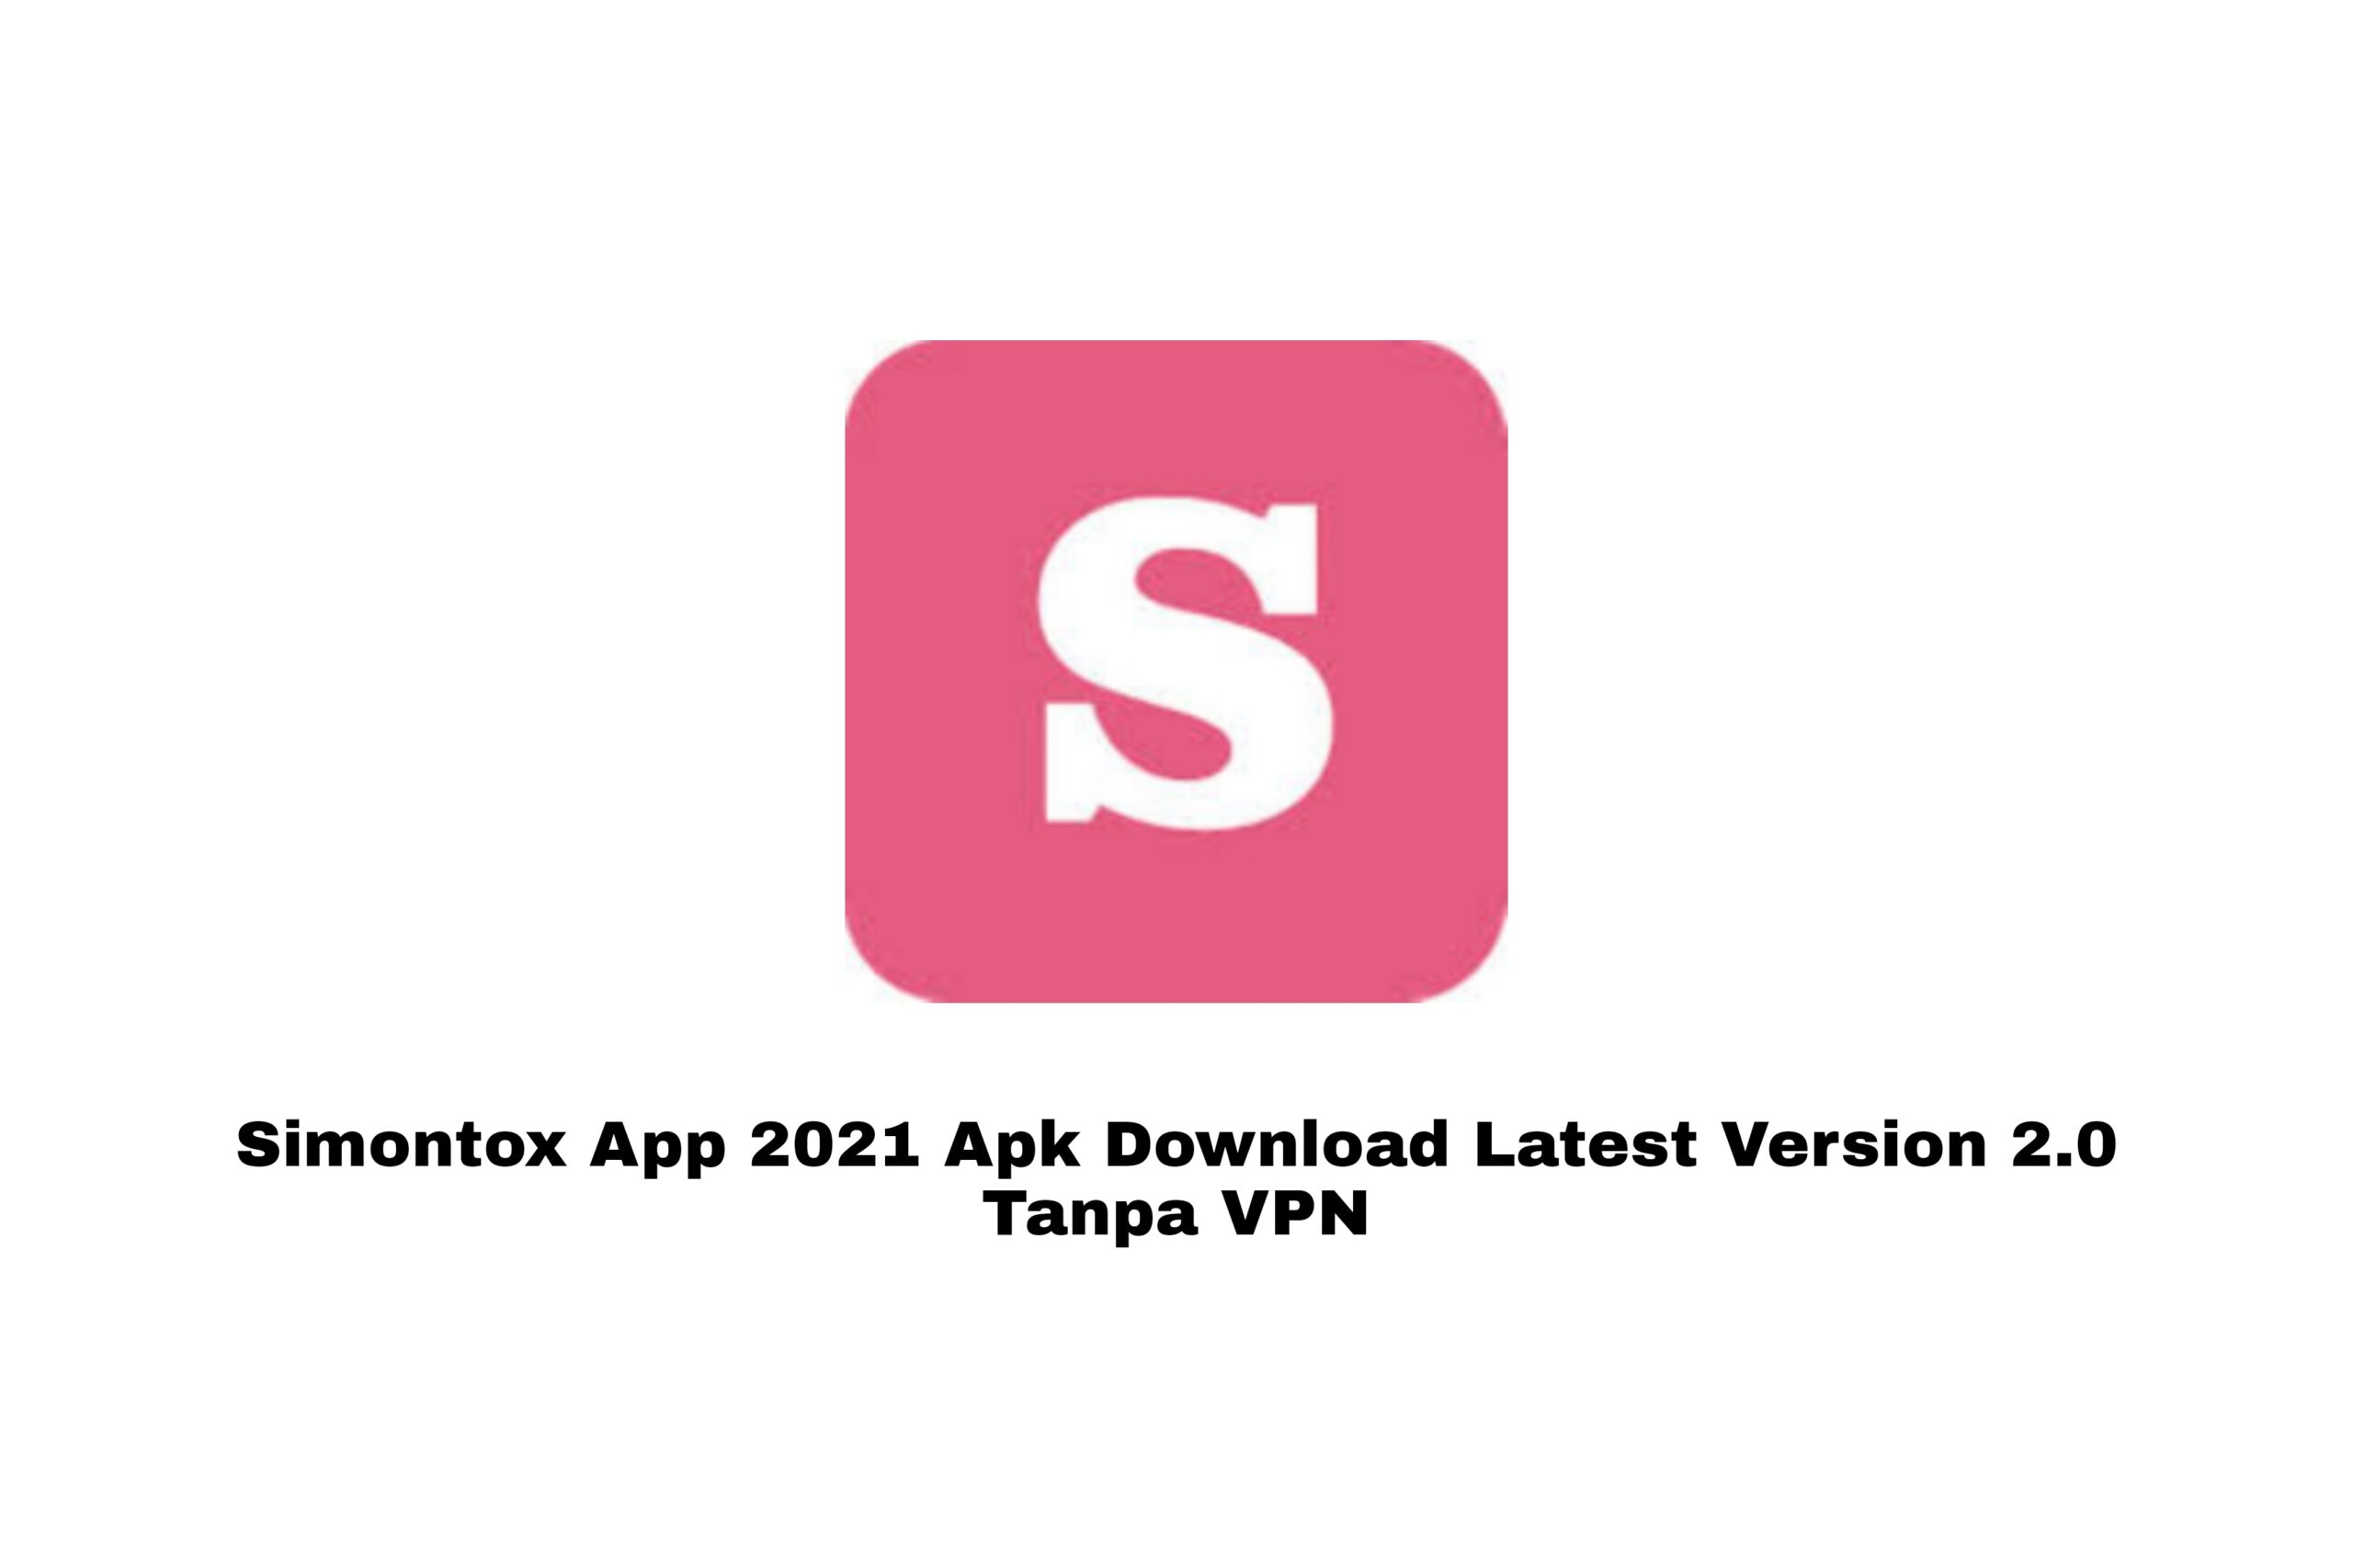 Simontox App 2021 Apk Download Latest Version 2.0 Tanpa